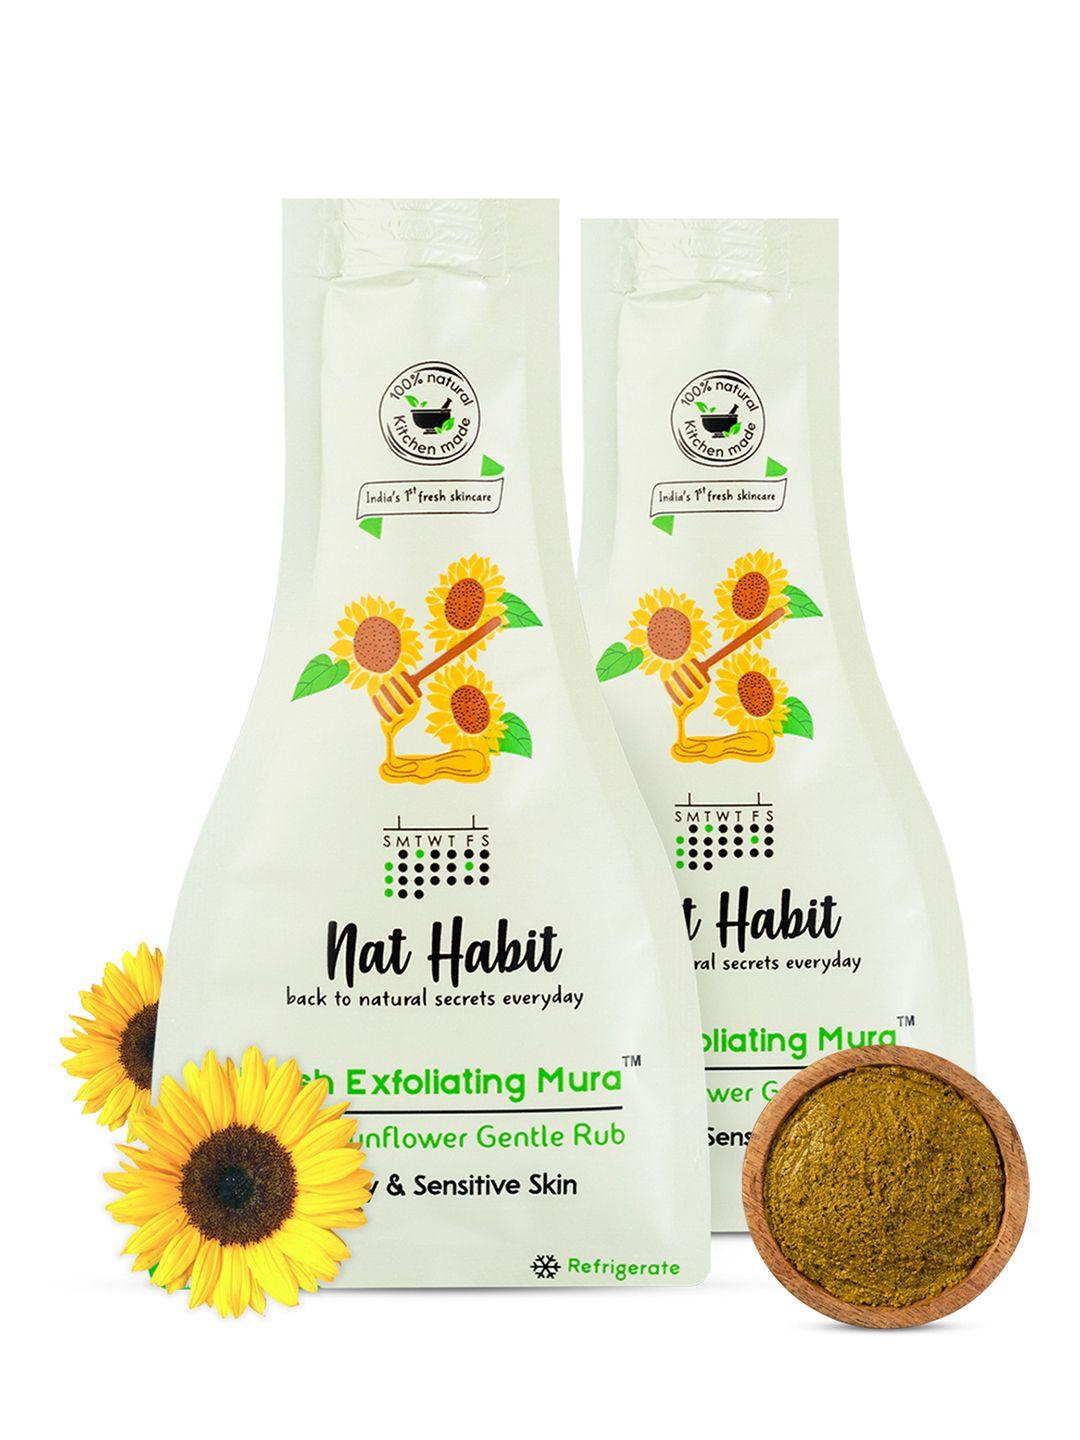 nat habit set of 2 fresh exfoliating mura face exfoliator with honey & sunflower-25g each